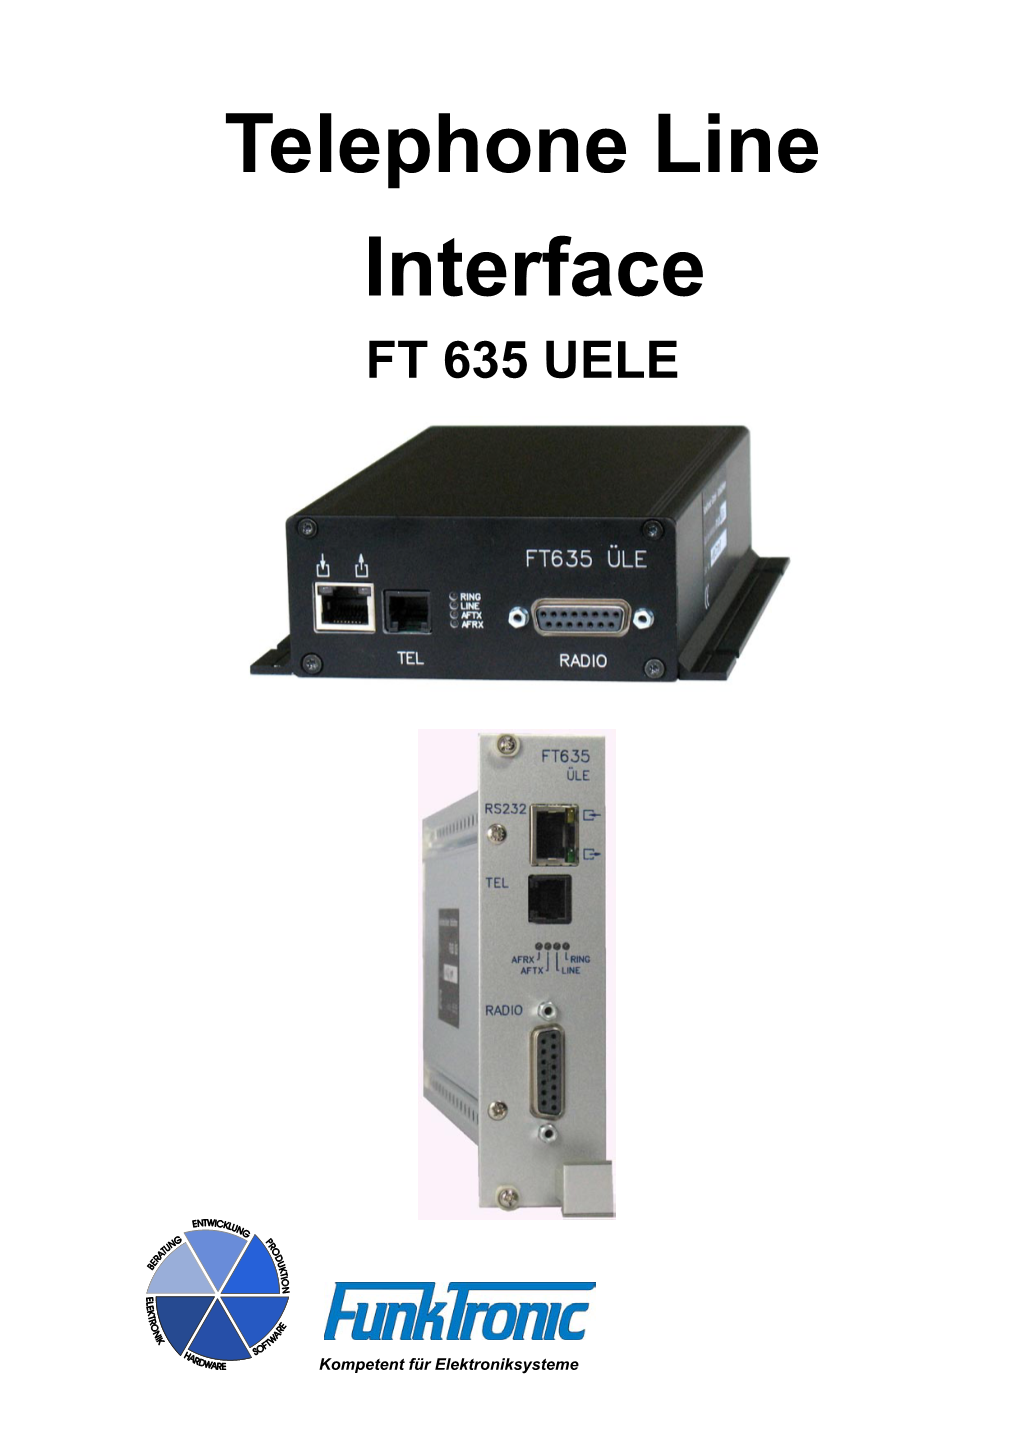 Telephone Line Interface FT 635 UELE